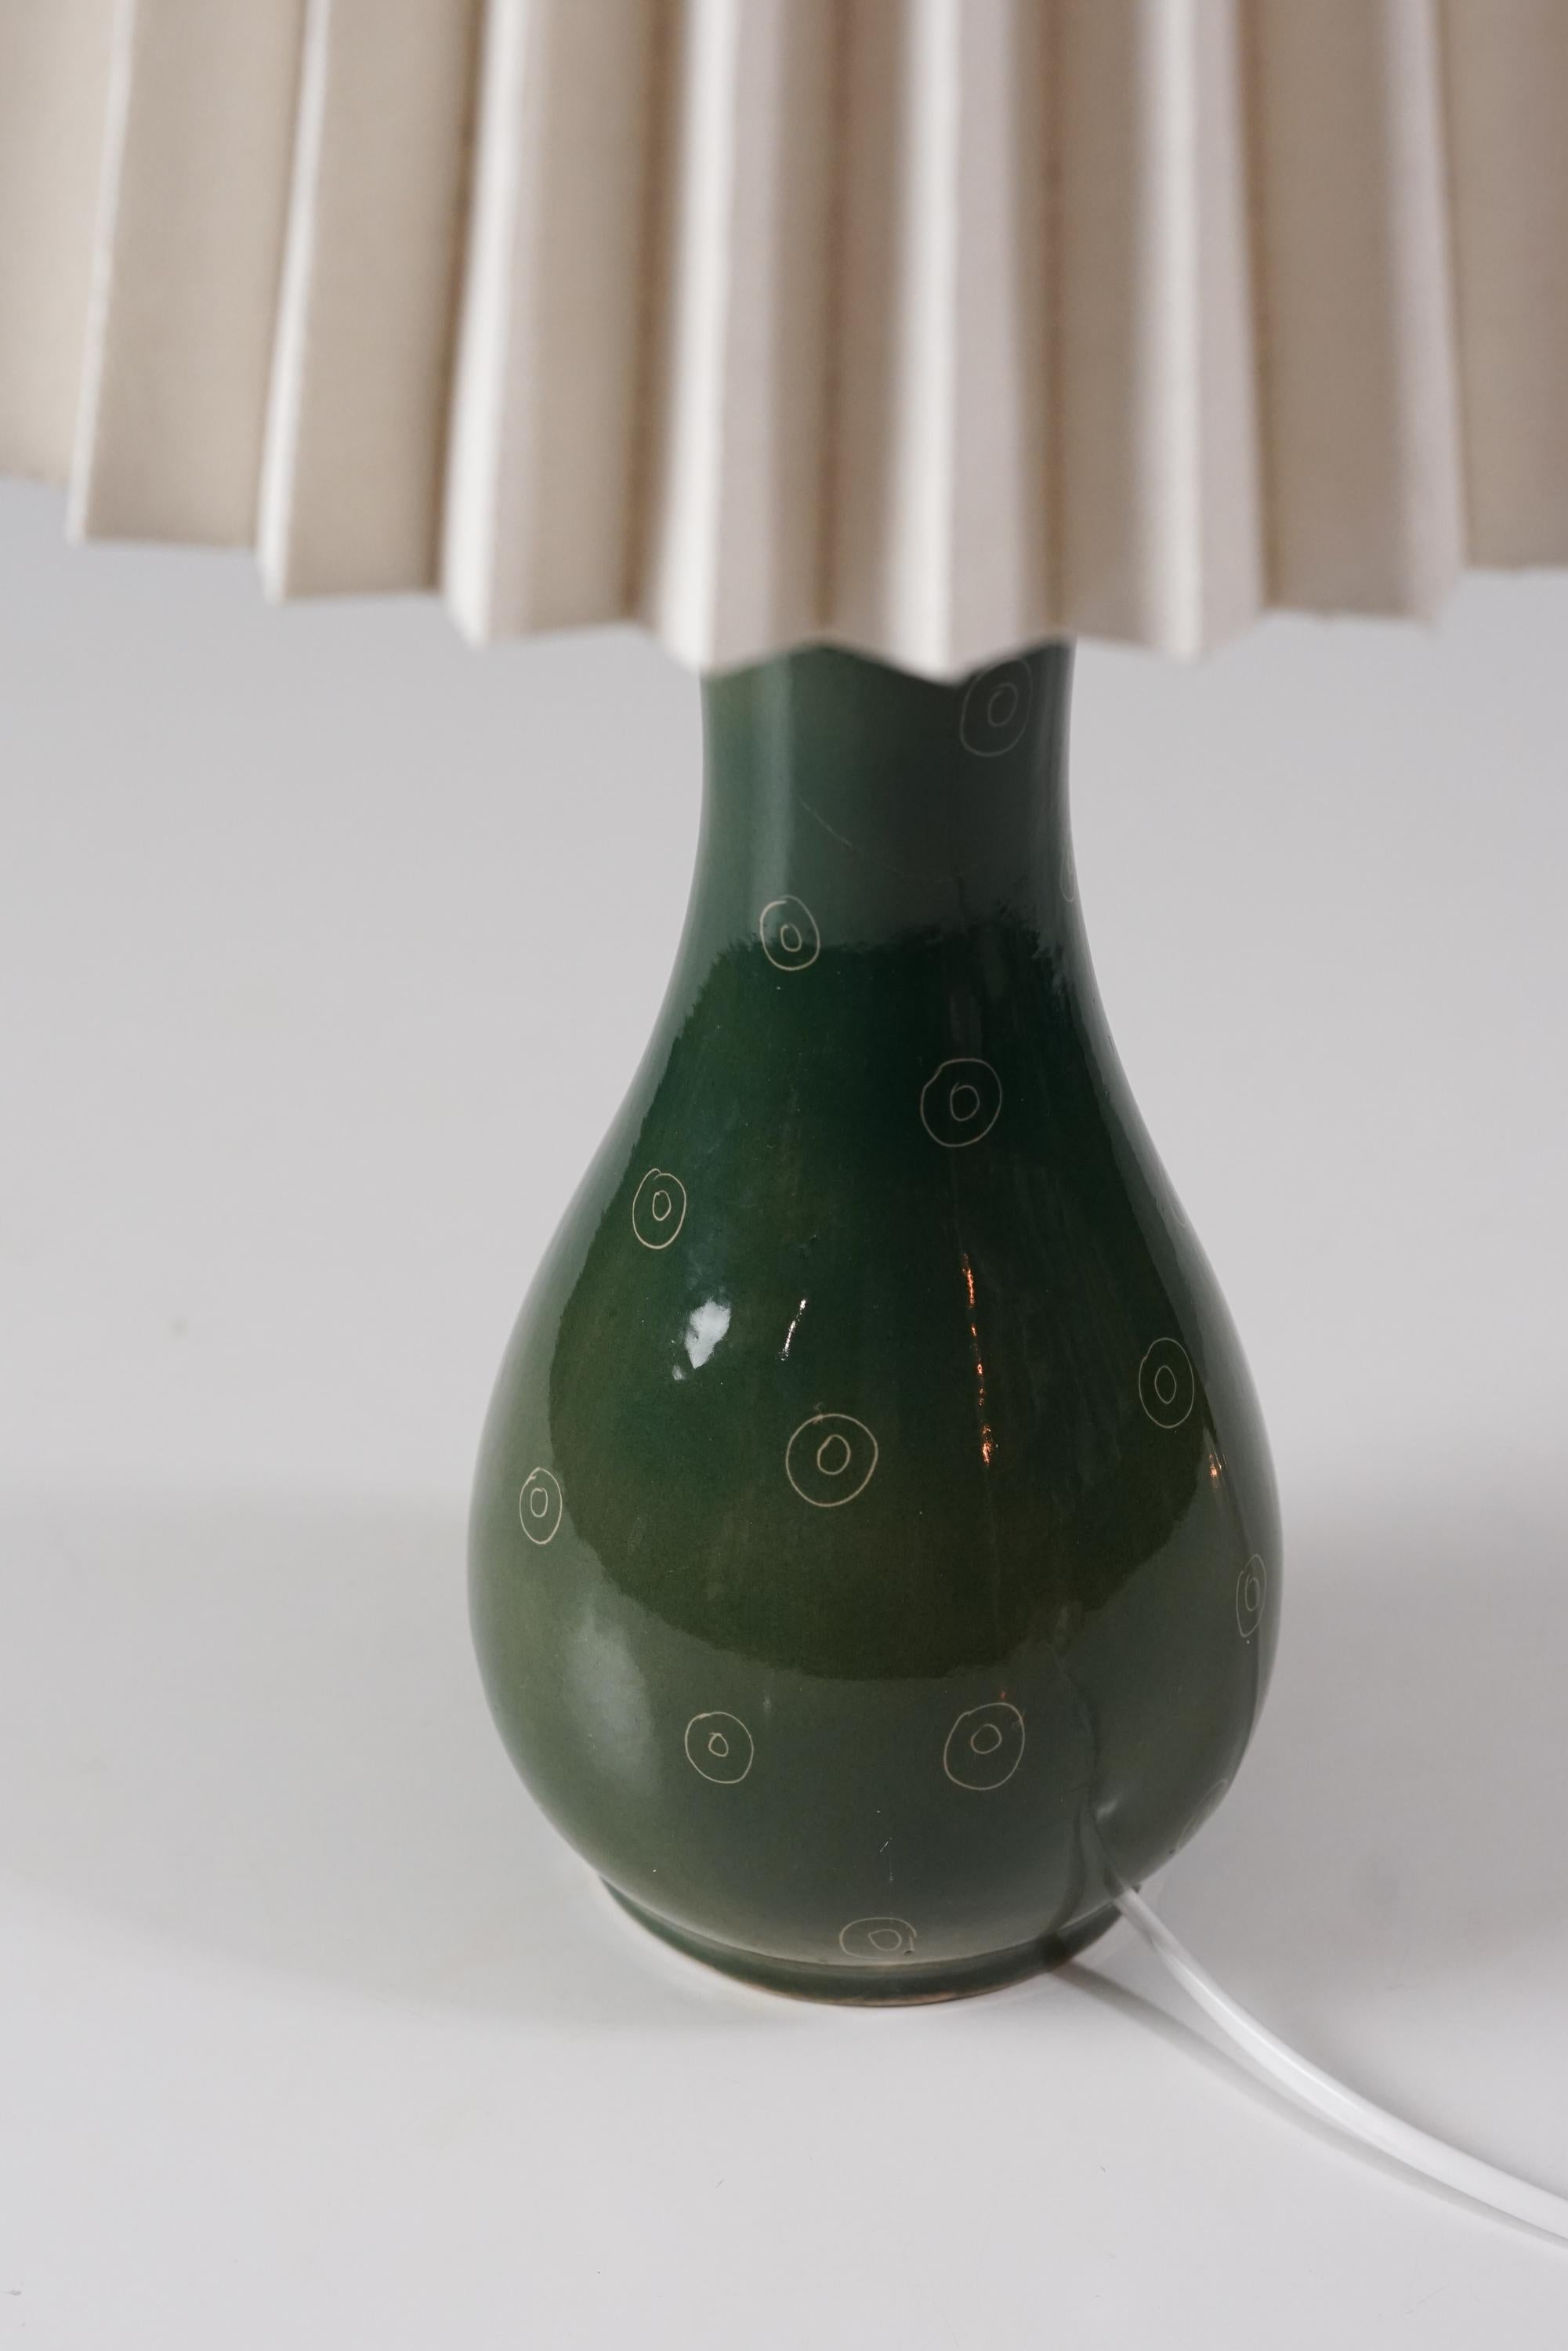 Glazed Toini Muona Ceramic Table Lamp, Arabia, 1950s For Sale